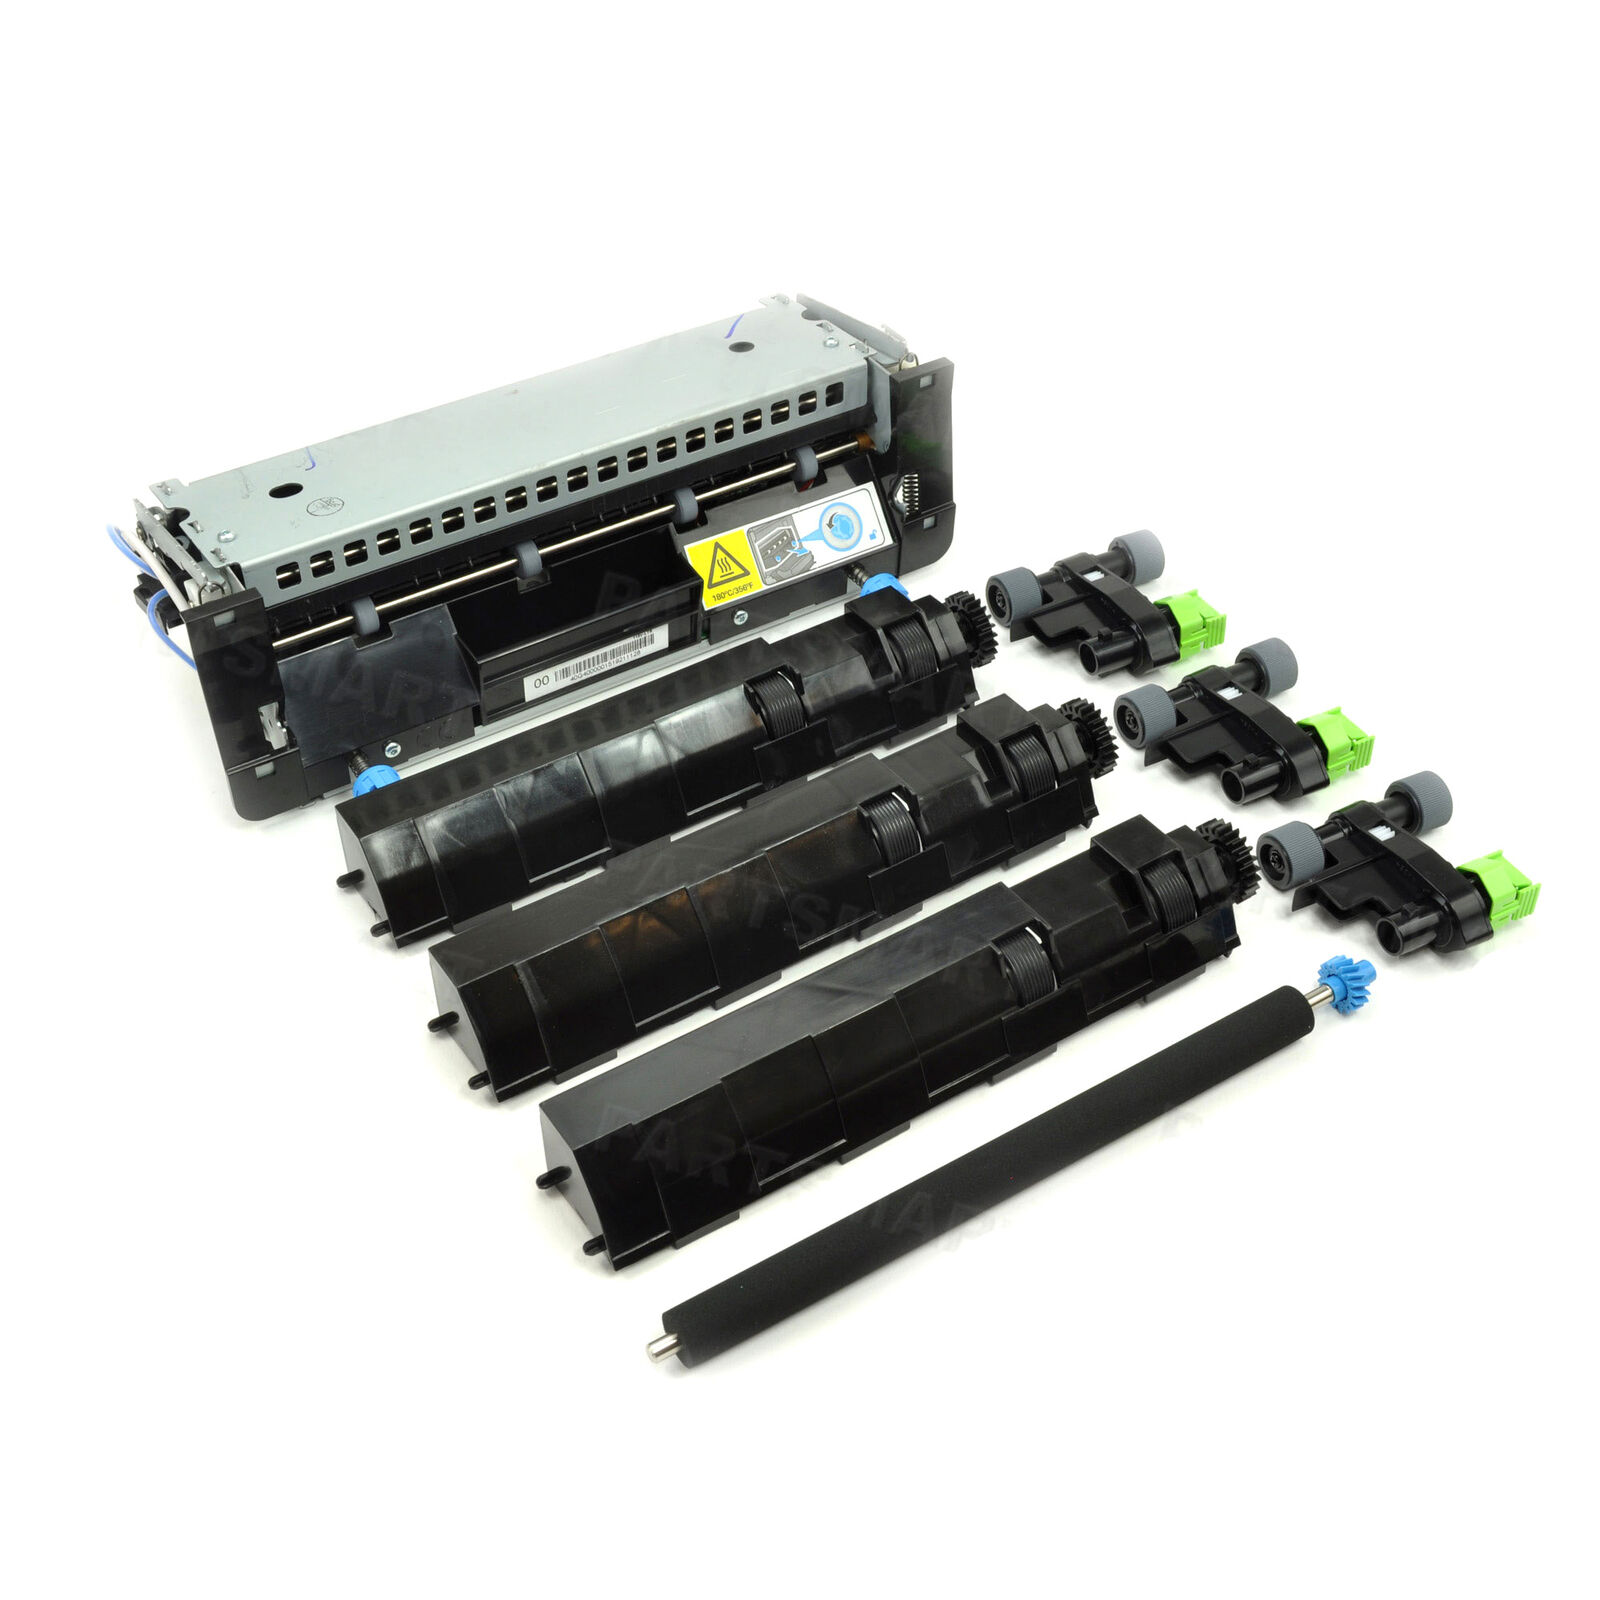 Printel 40X8420 (40X8425) Maintenance Kit (110V) for Lexmark MS810, with 40X7743